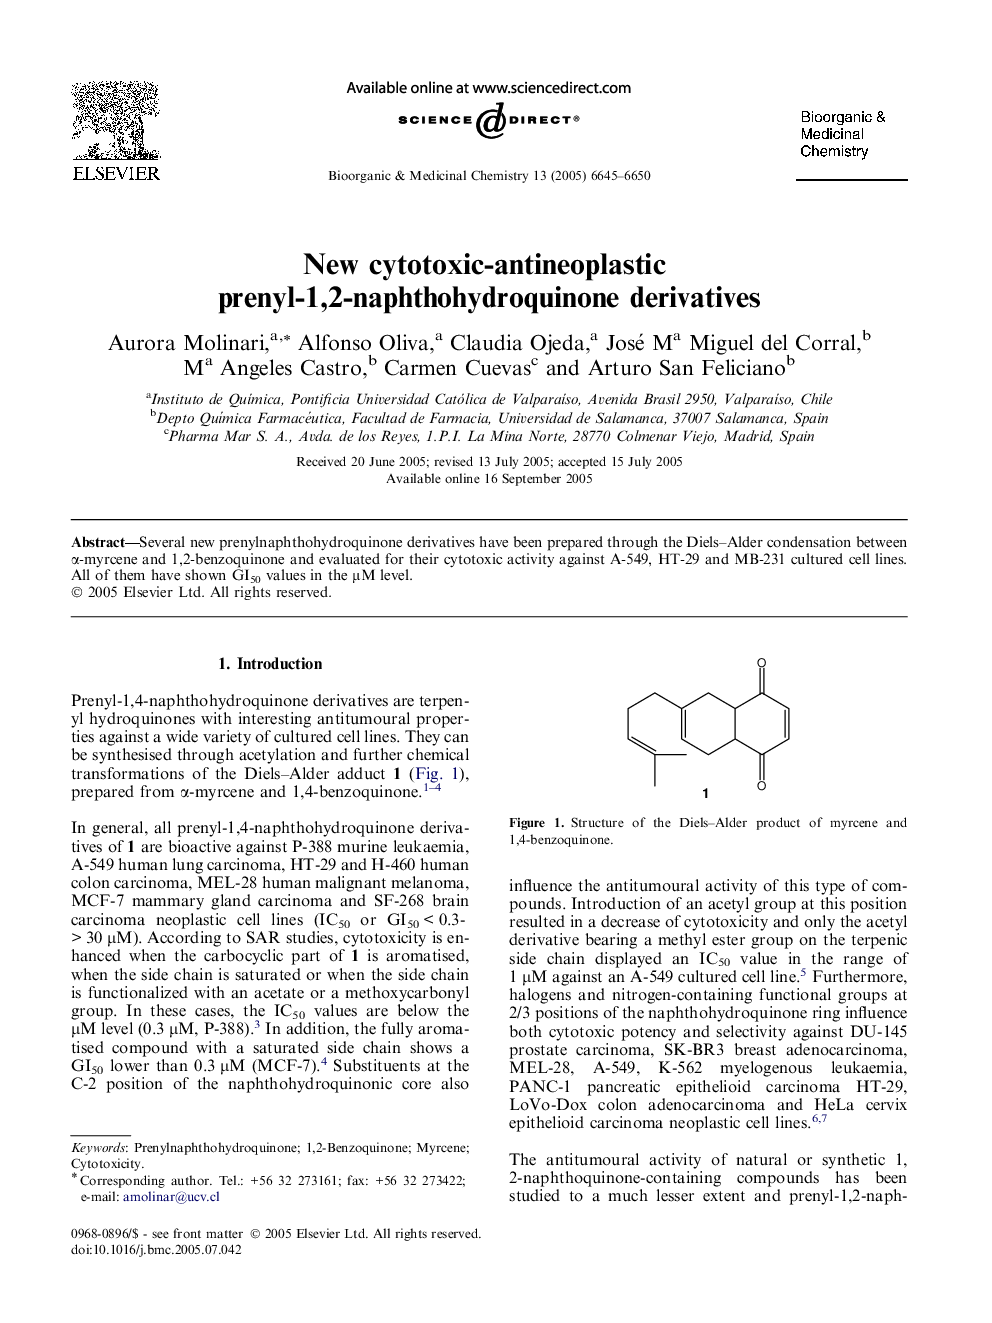 New cytotoxic-antineoplastic prenyl-1,2-naphthohydroquinone derivatives